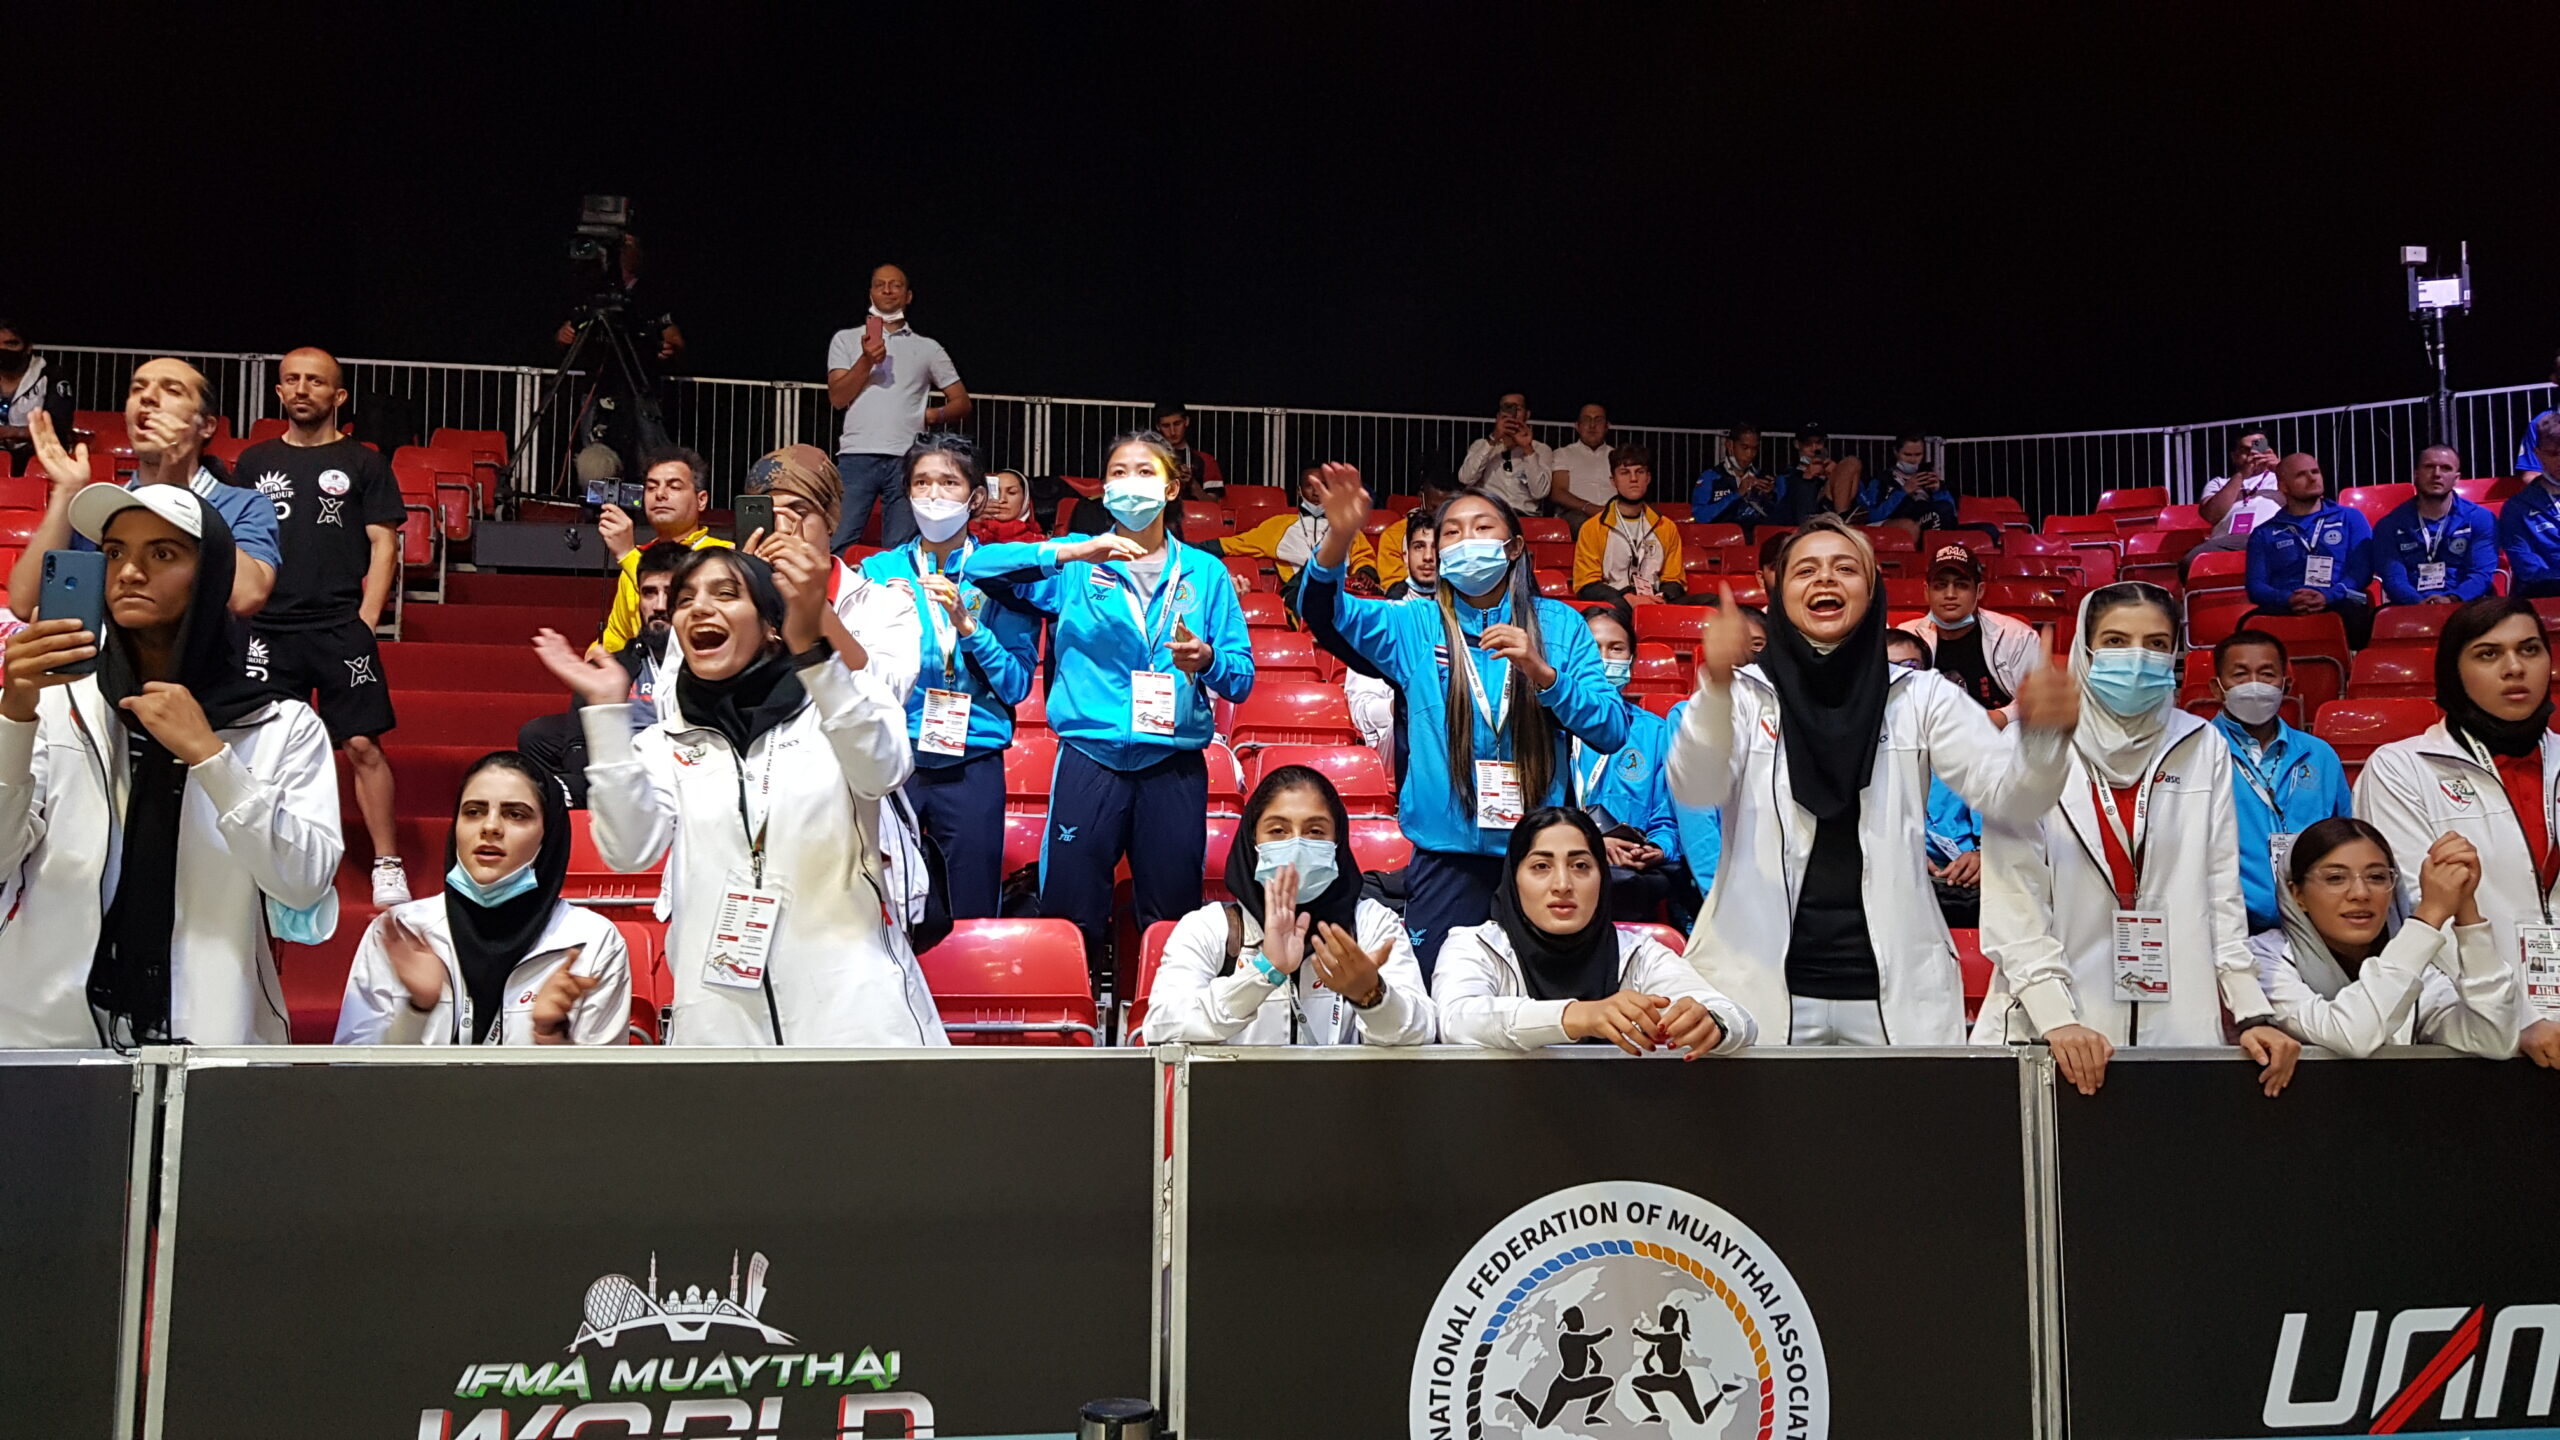 UAE Muaythai Championship 2022 Schedule - UAM News